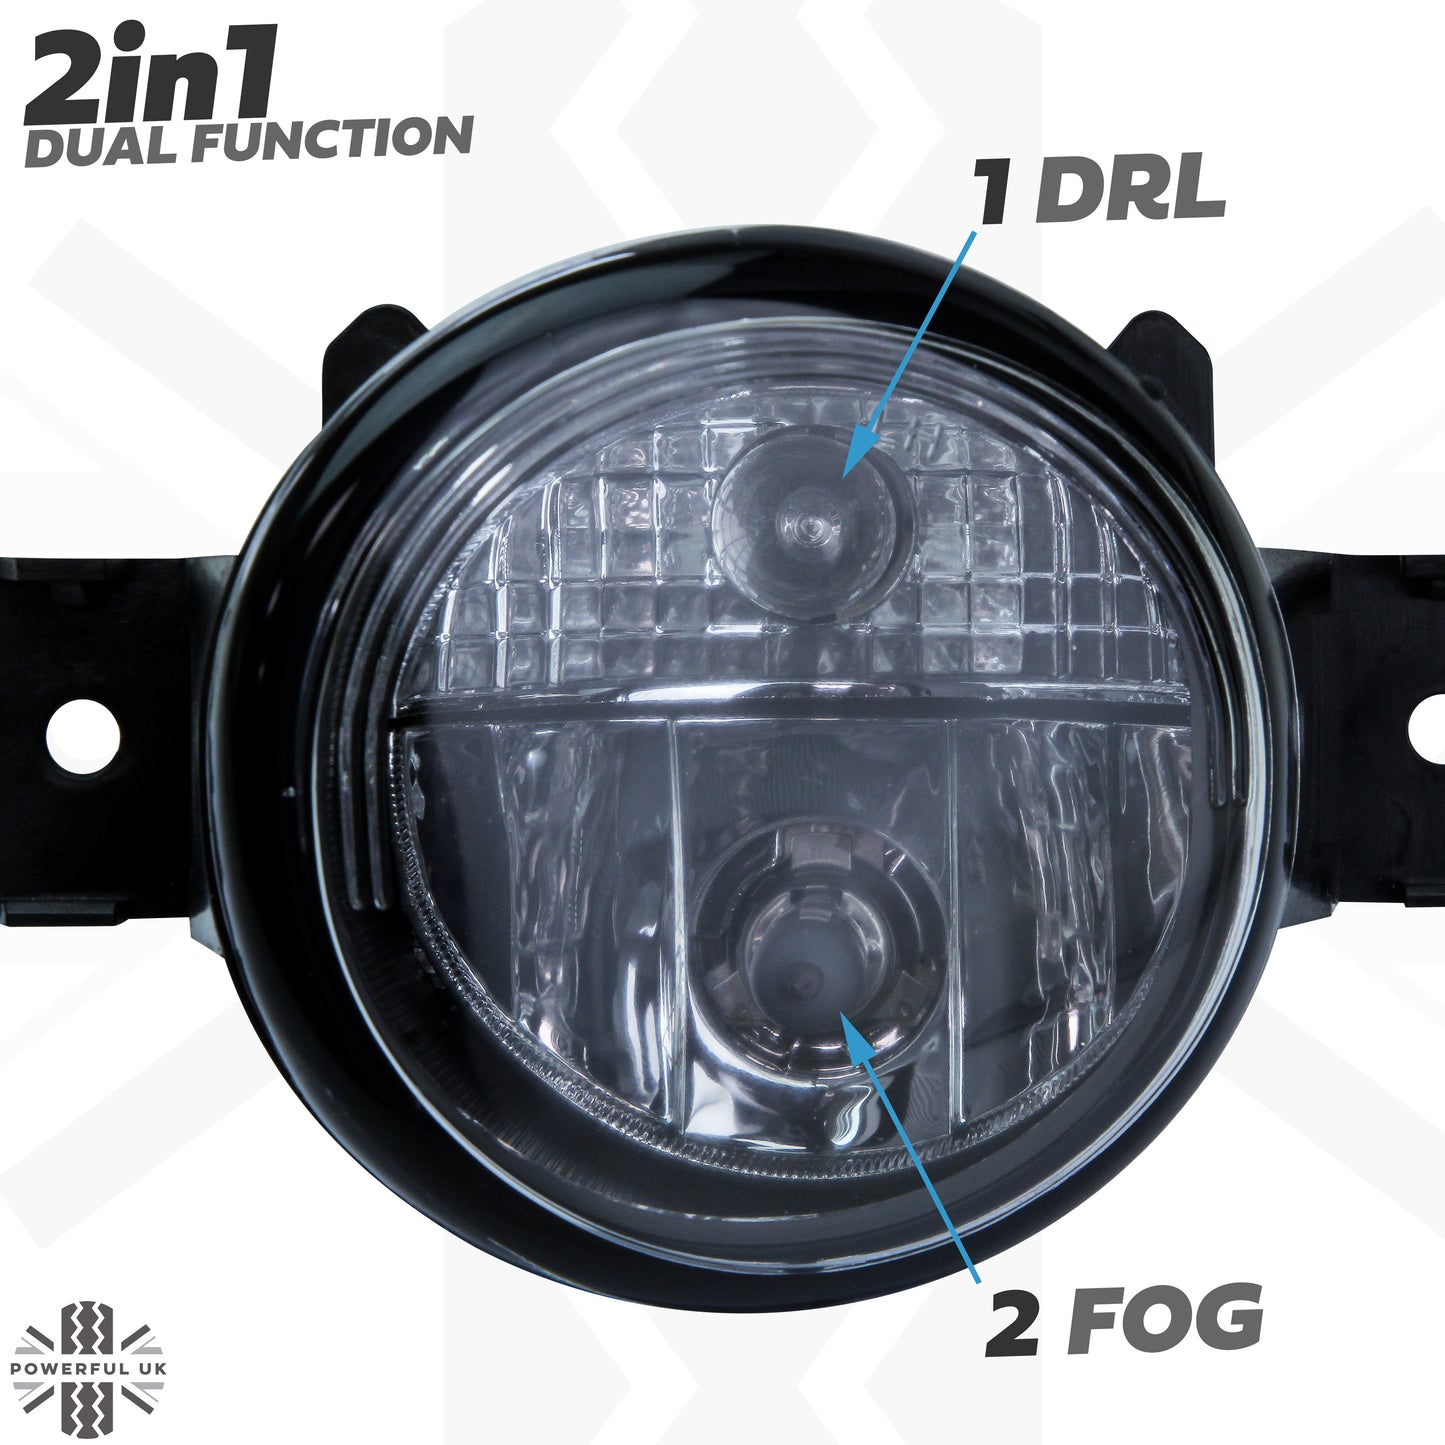 Dual Function Fog/DRL Lights (Dual Function) for Nissan Navara NP300